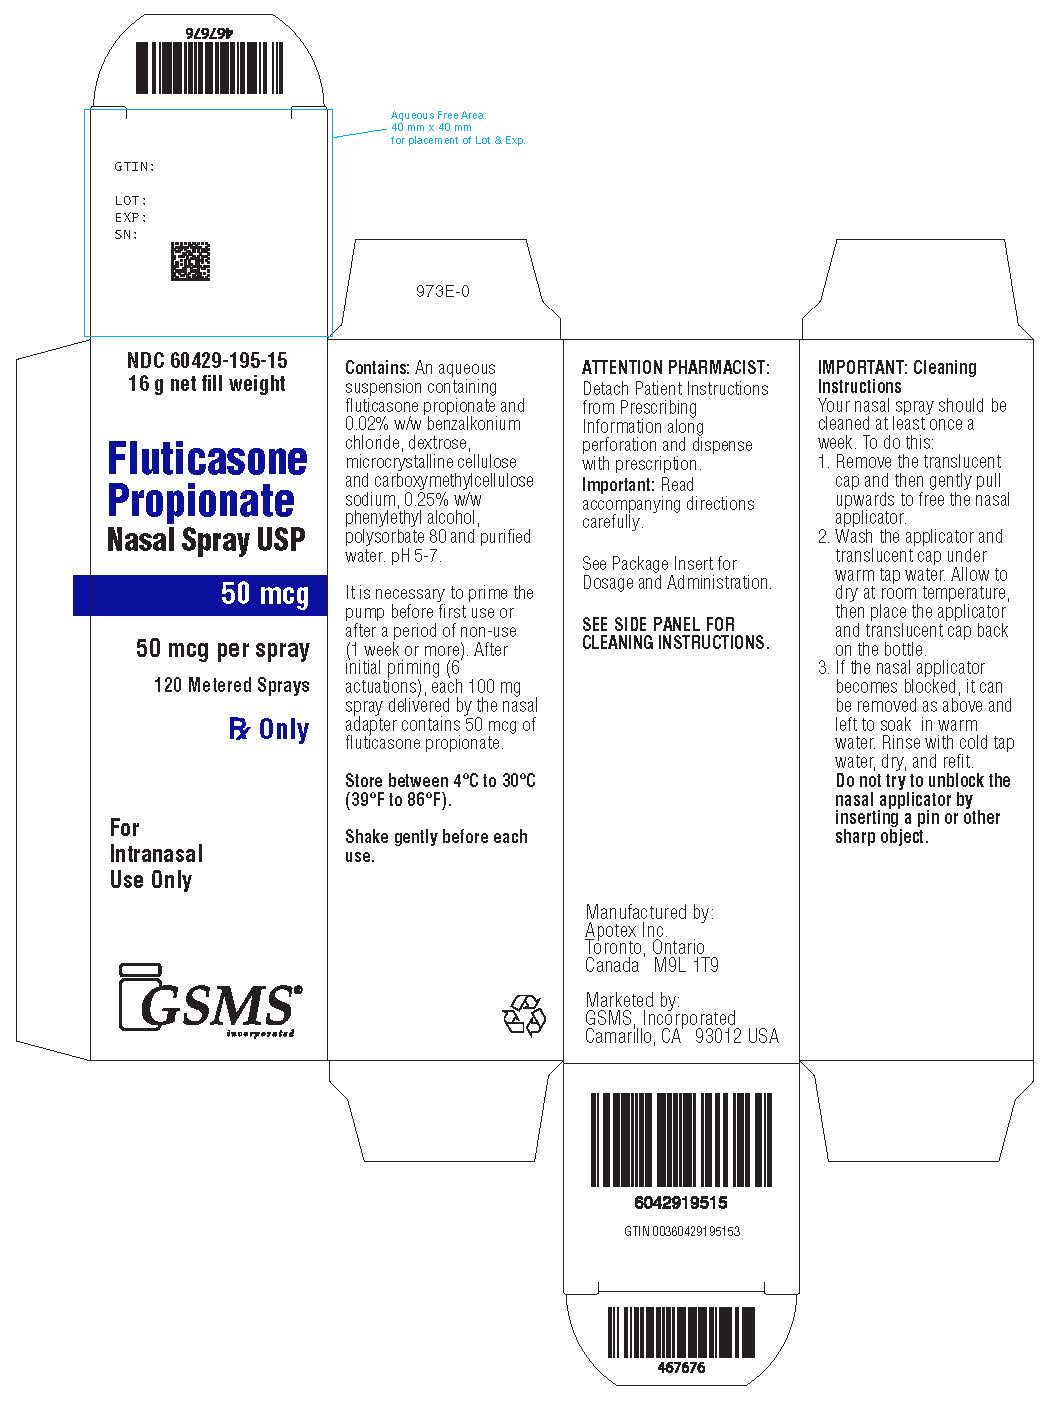 Approved- Fluticasone Propionate Chipboard- 60429-195-15 (Private Labeled).jpg